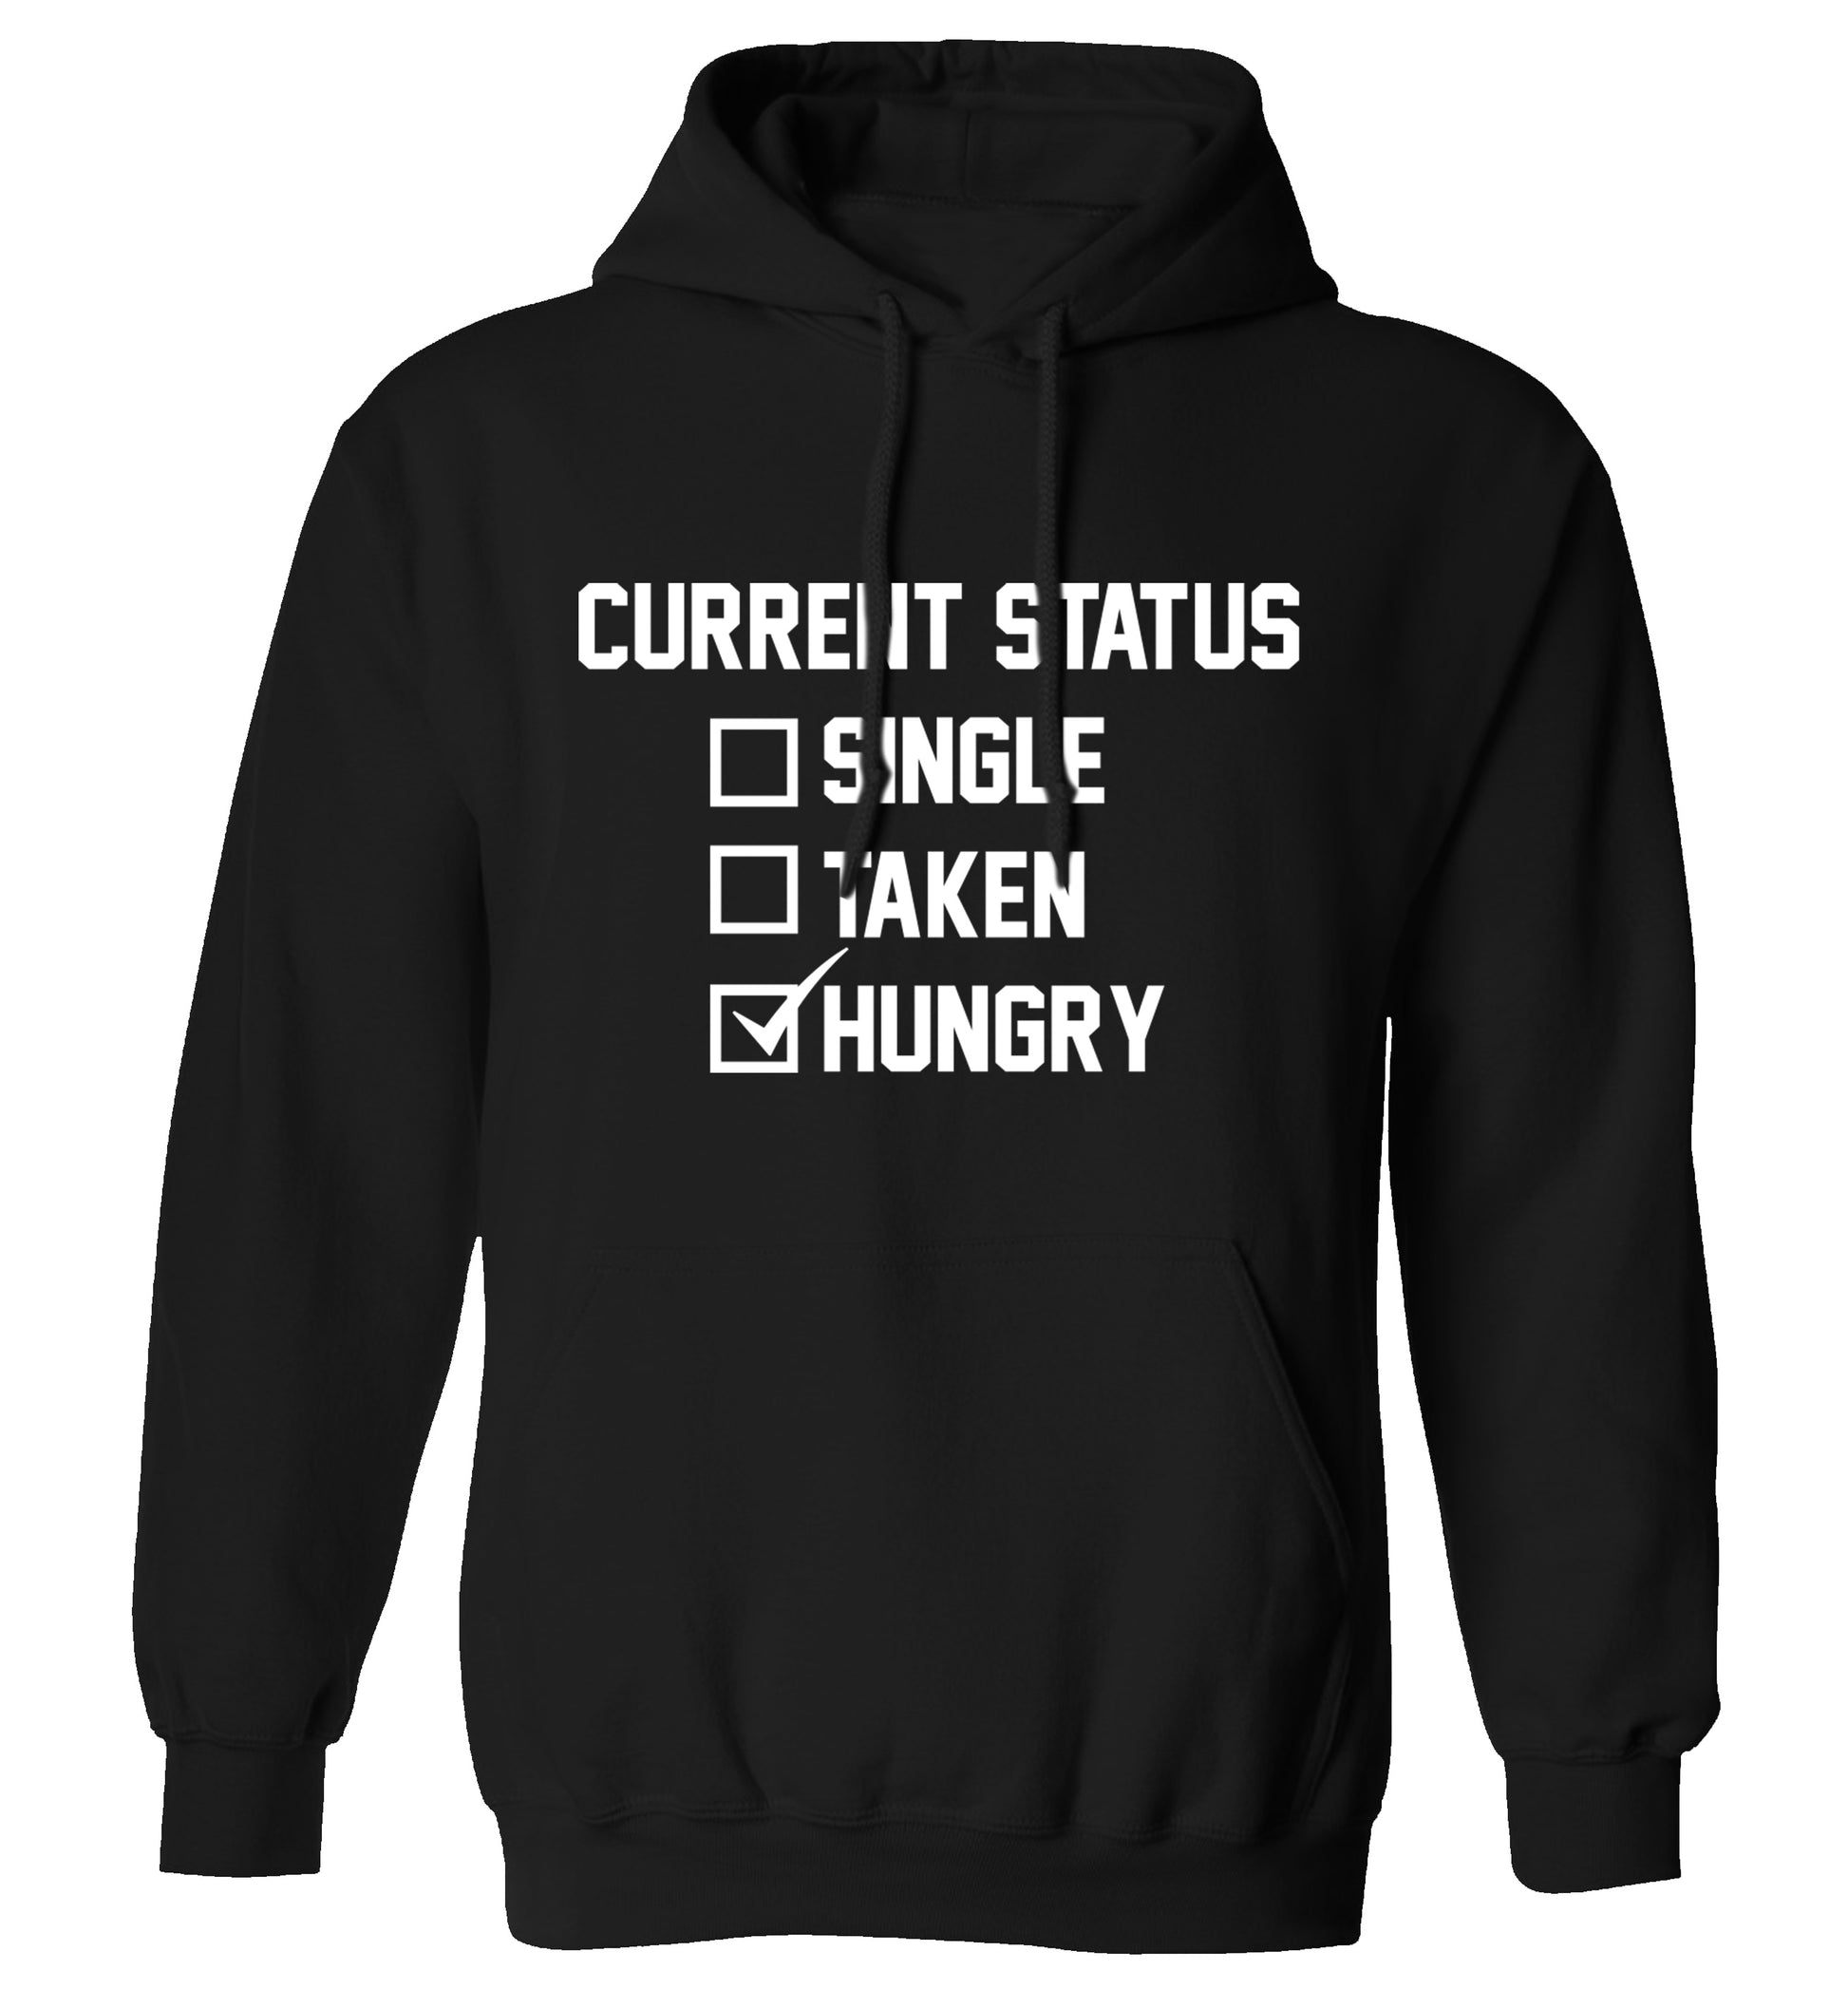 Relationship status single taken hungry adults unisex black hoodie 2XL